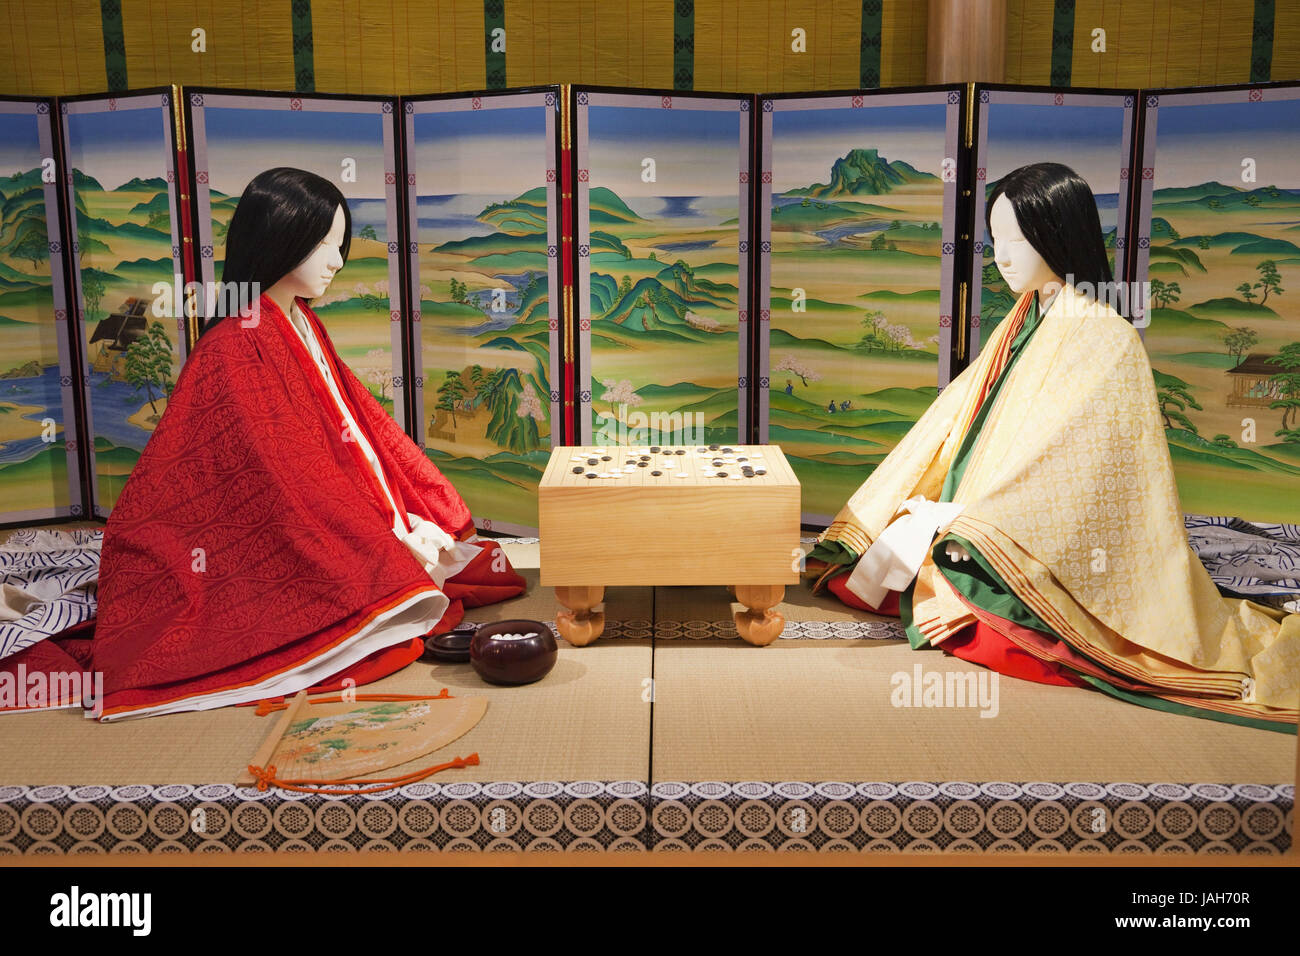 Japan,Kyoto,Uji,to valley of Genji museum,Genji Monogatari,inside,exhibit,characters,courtesans,Go game, Stock Photo